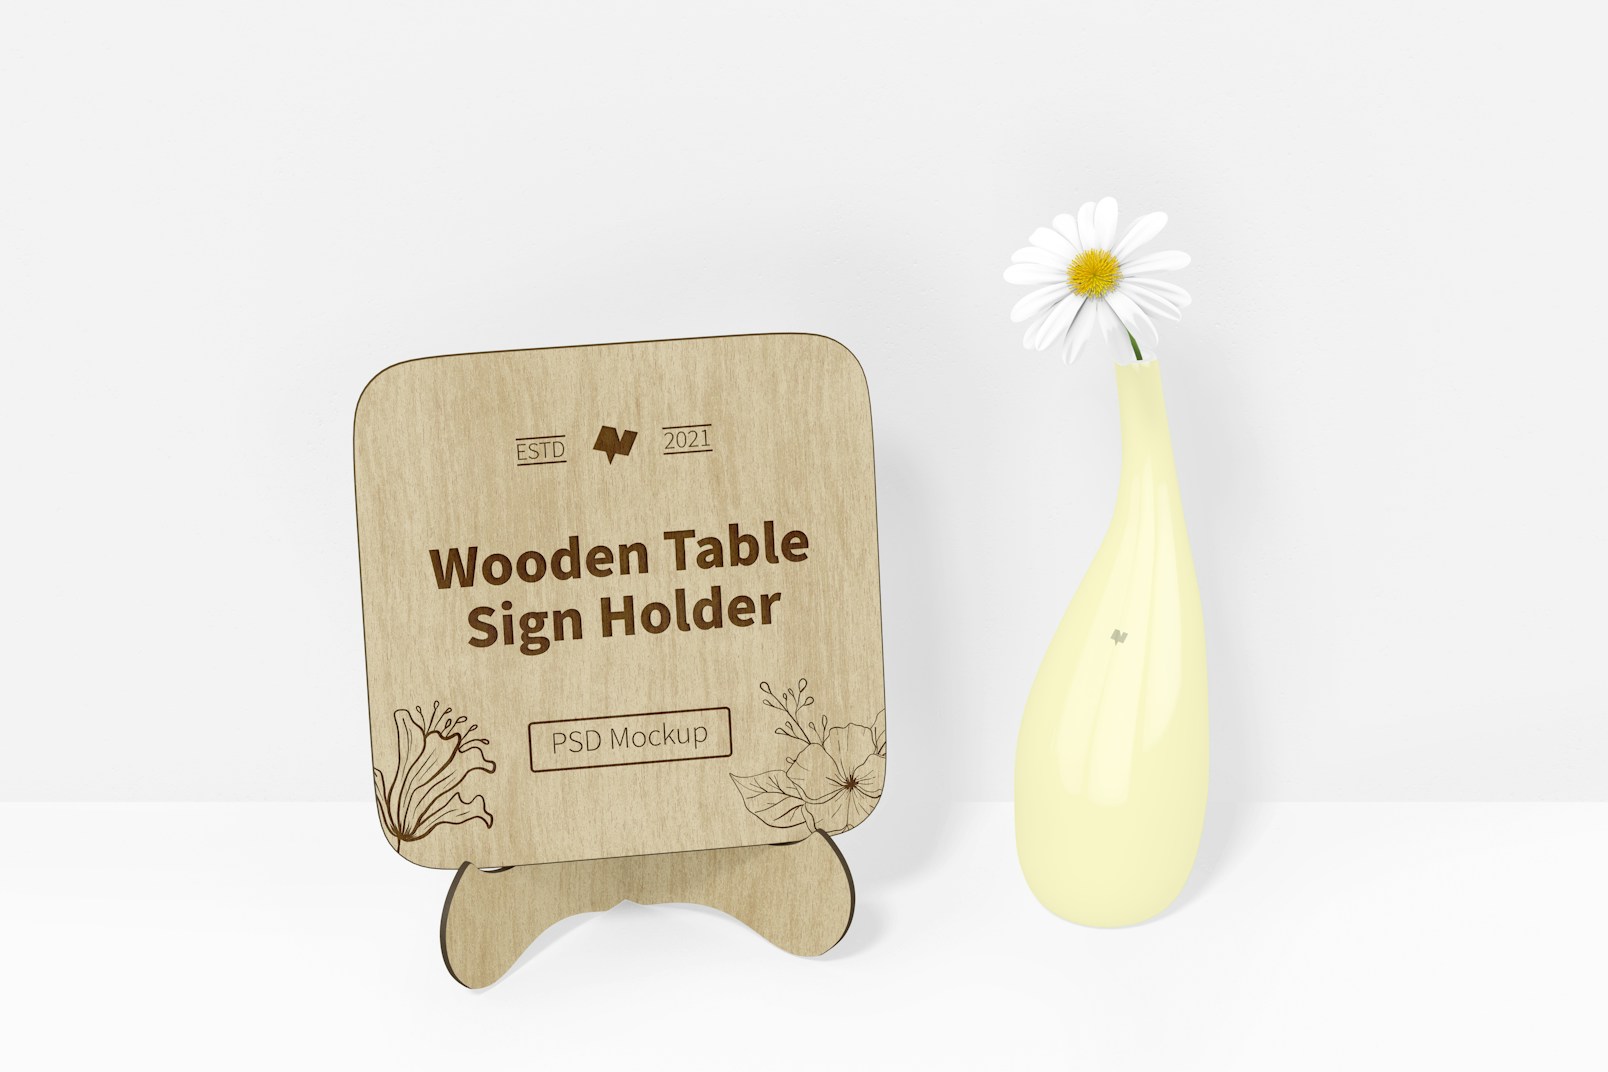 Wooden Table Sign Holder Mockup, Perspective